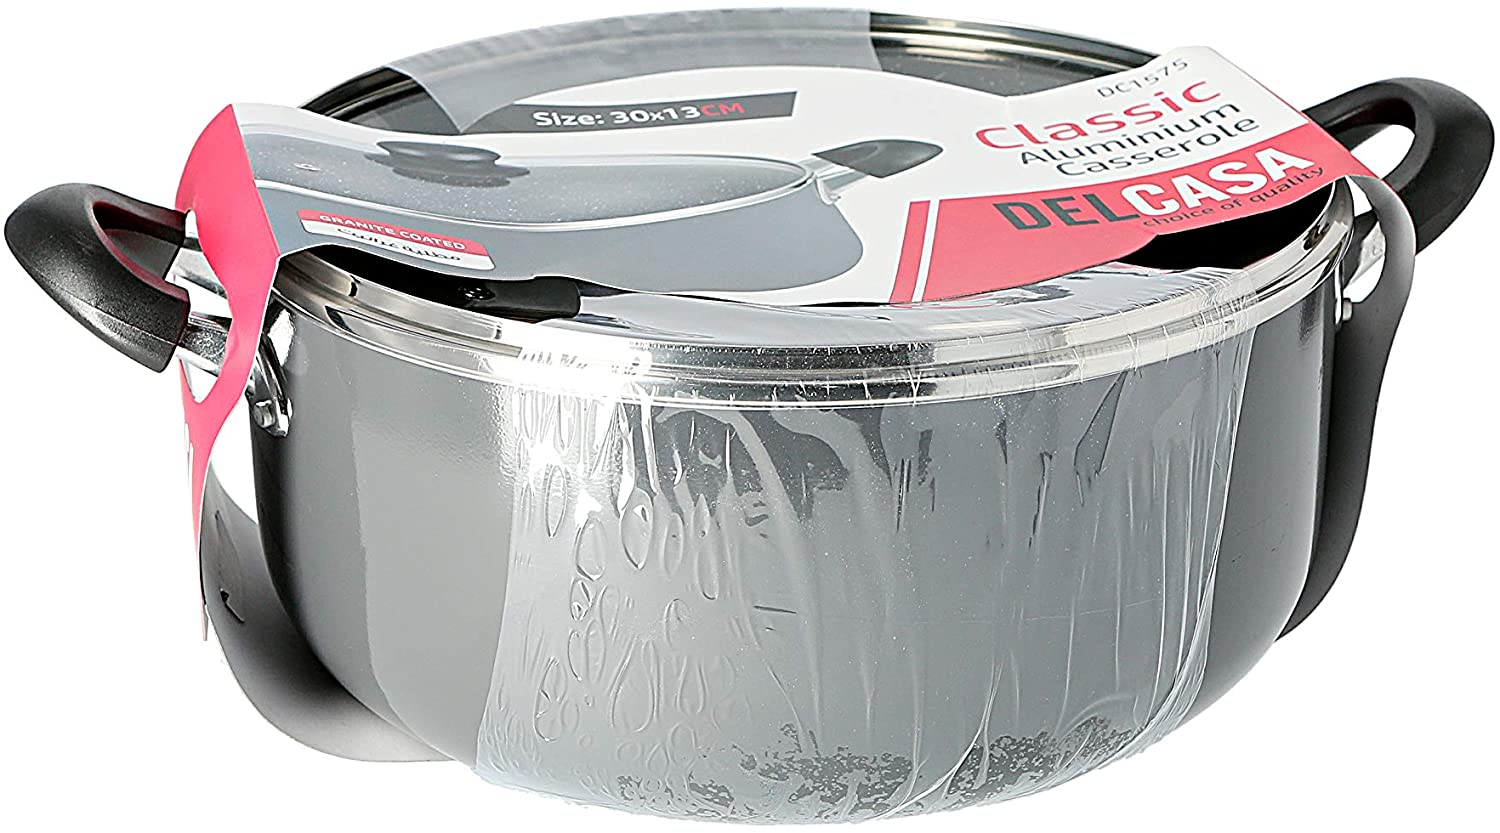 Delcasa 28Cm Non Stick Casserole Stock Pot With Glass Lid Aluminium Cookware Pan Induction Safe